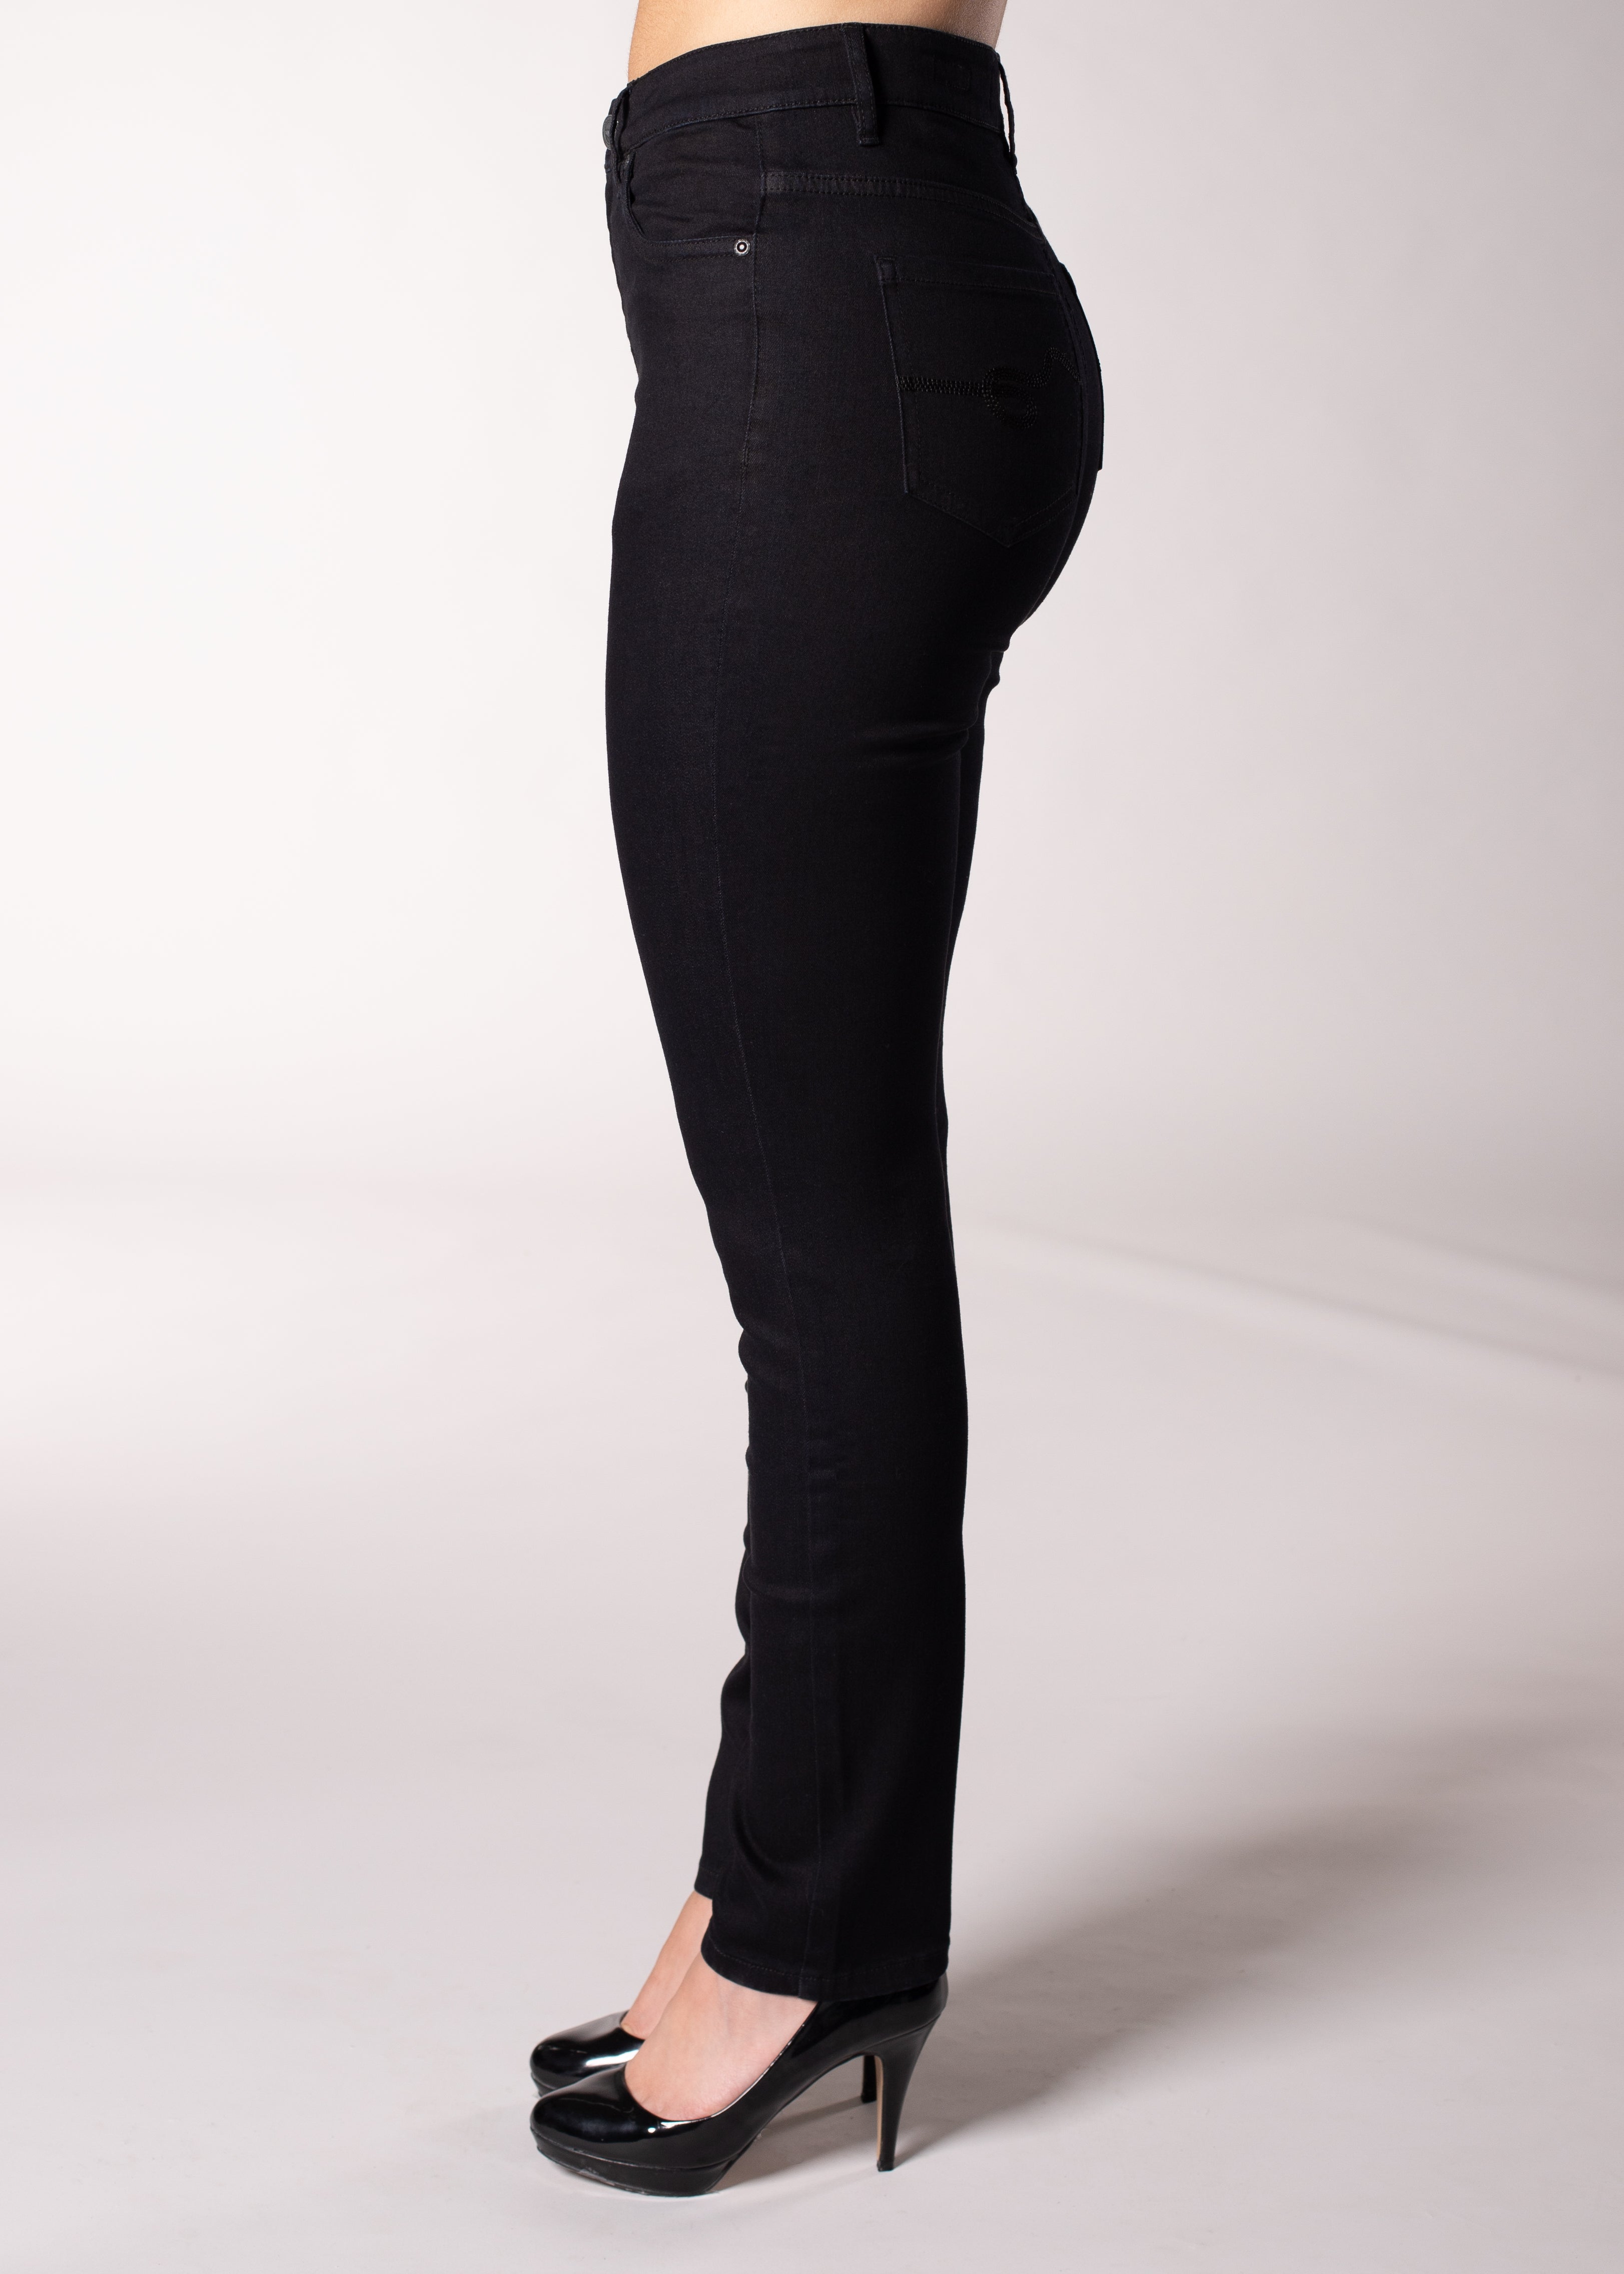 Carreli Jeans®  Angela Fit Straight Leg in Black Wash